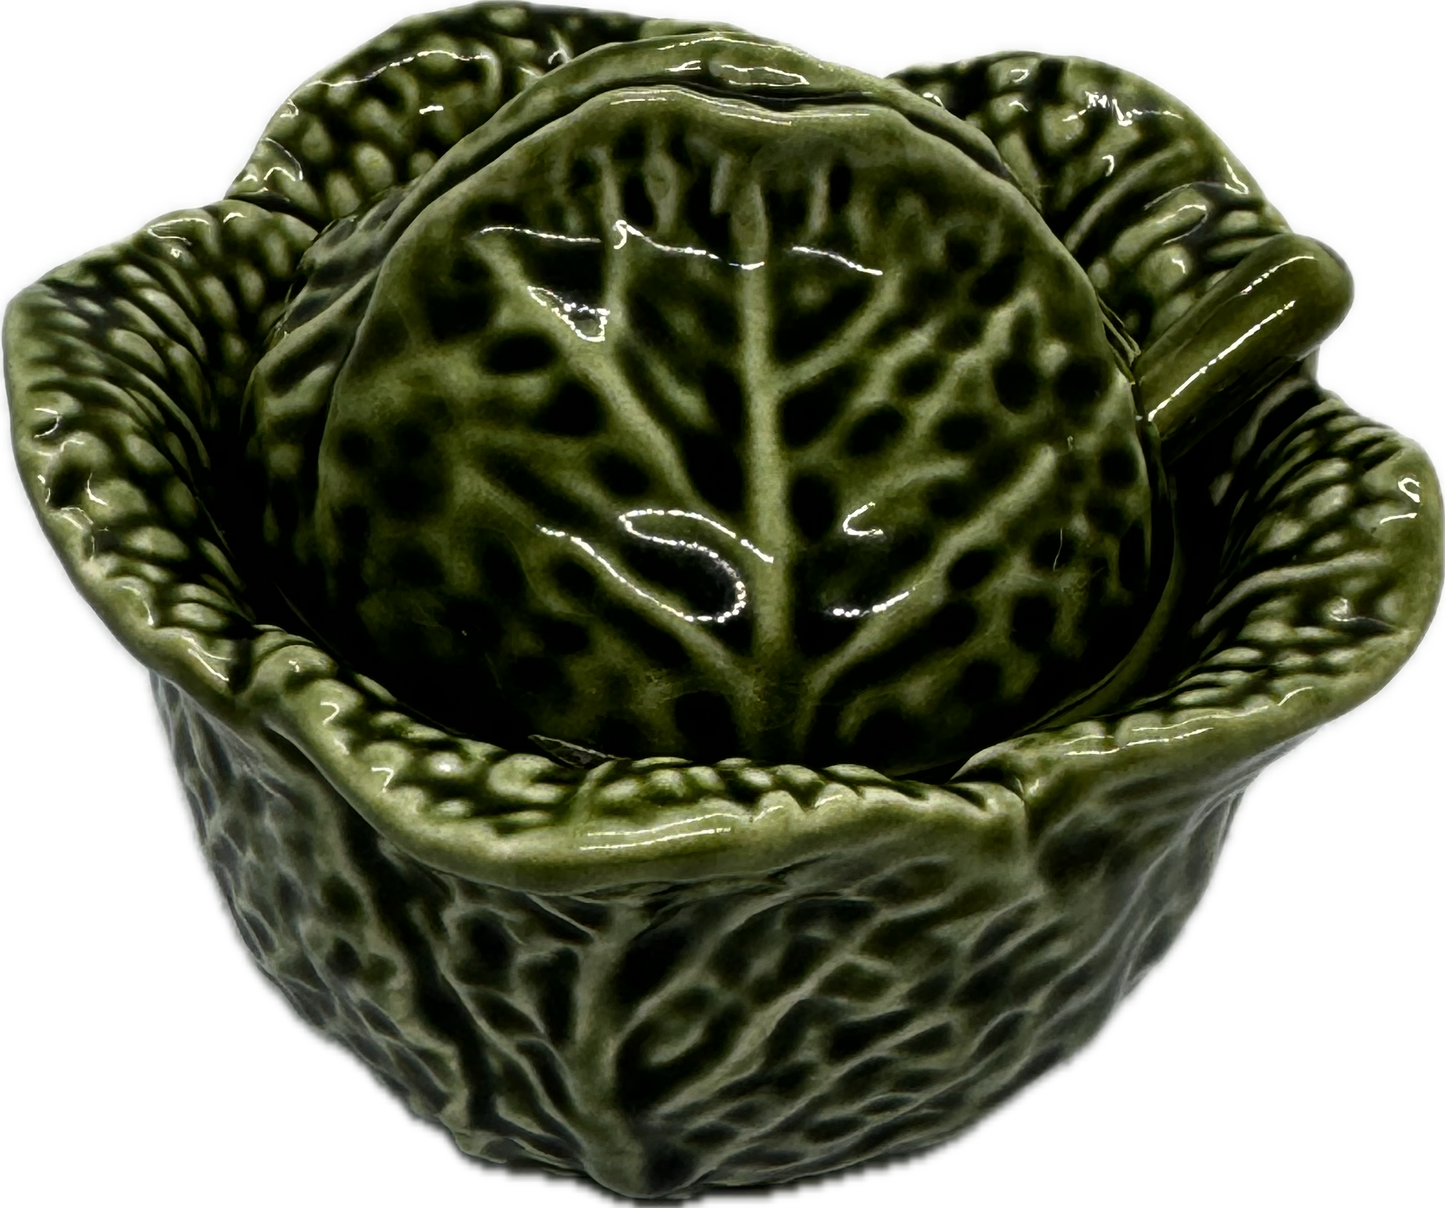 Rare Cabbage Sugar Bowl